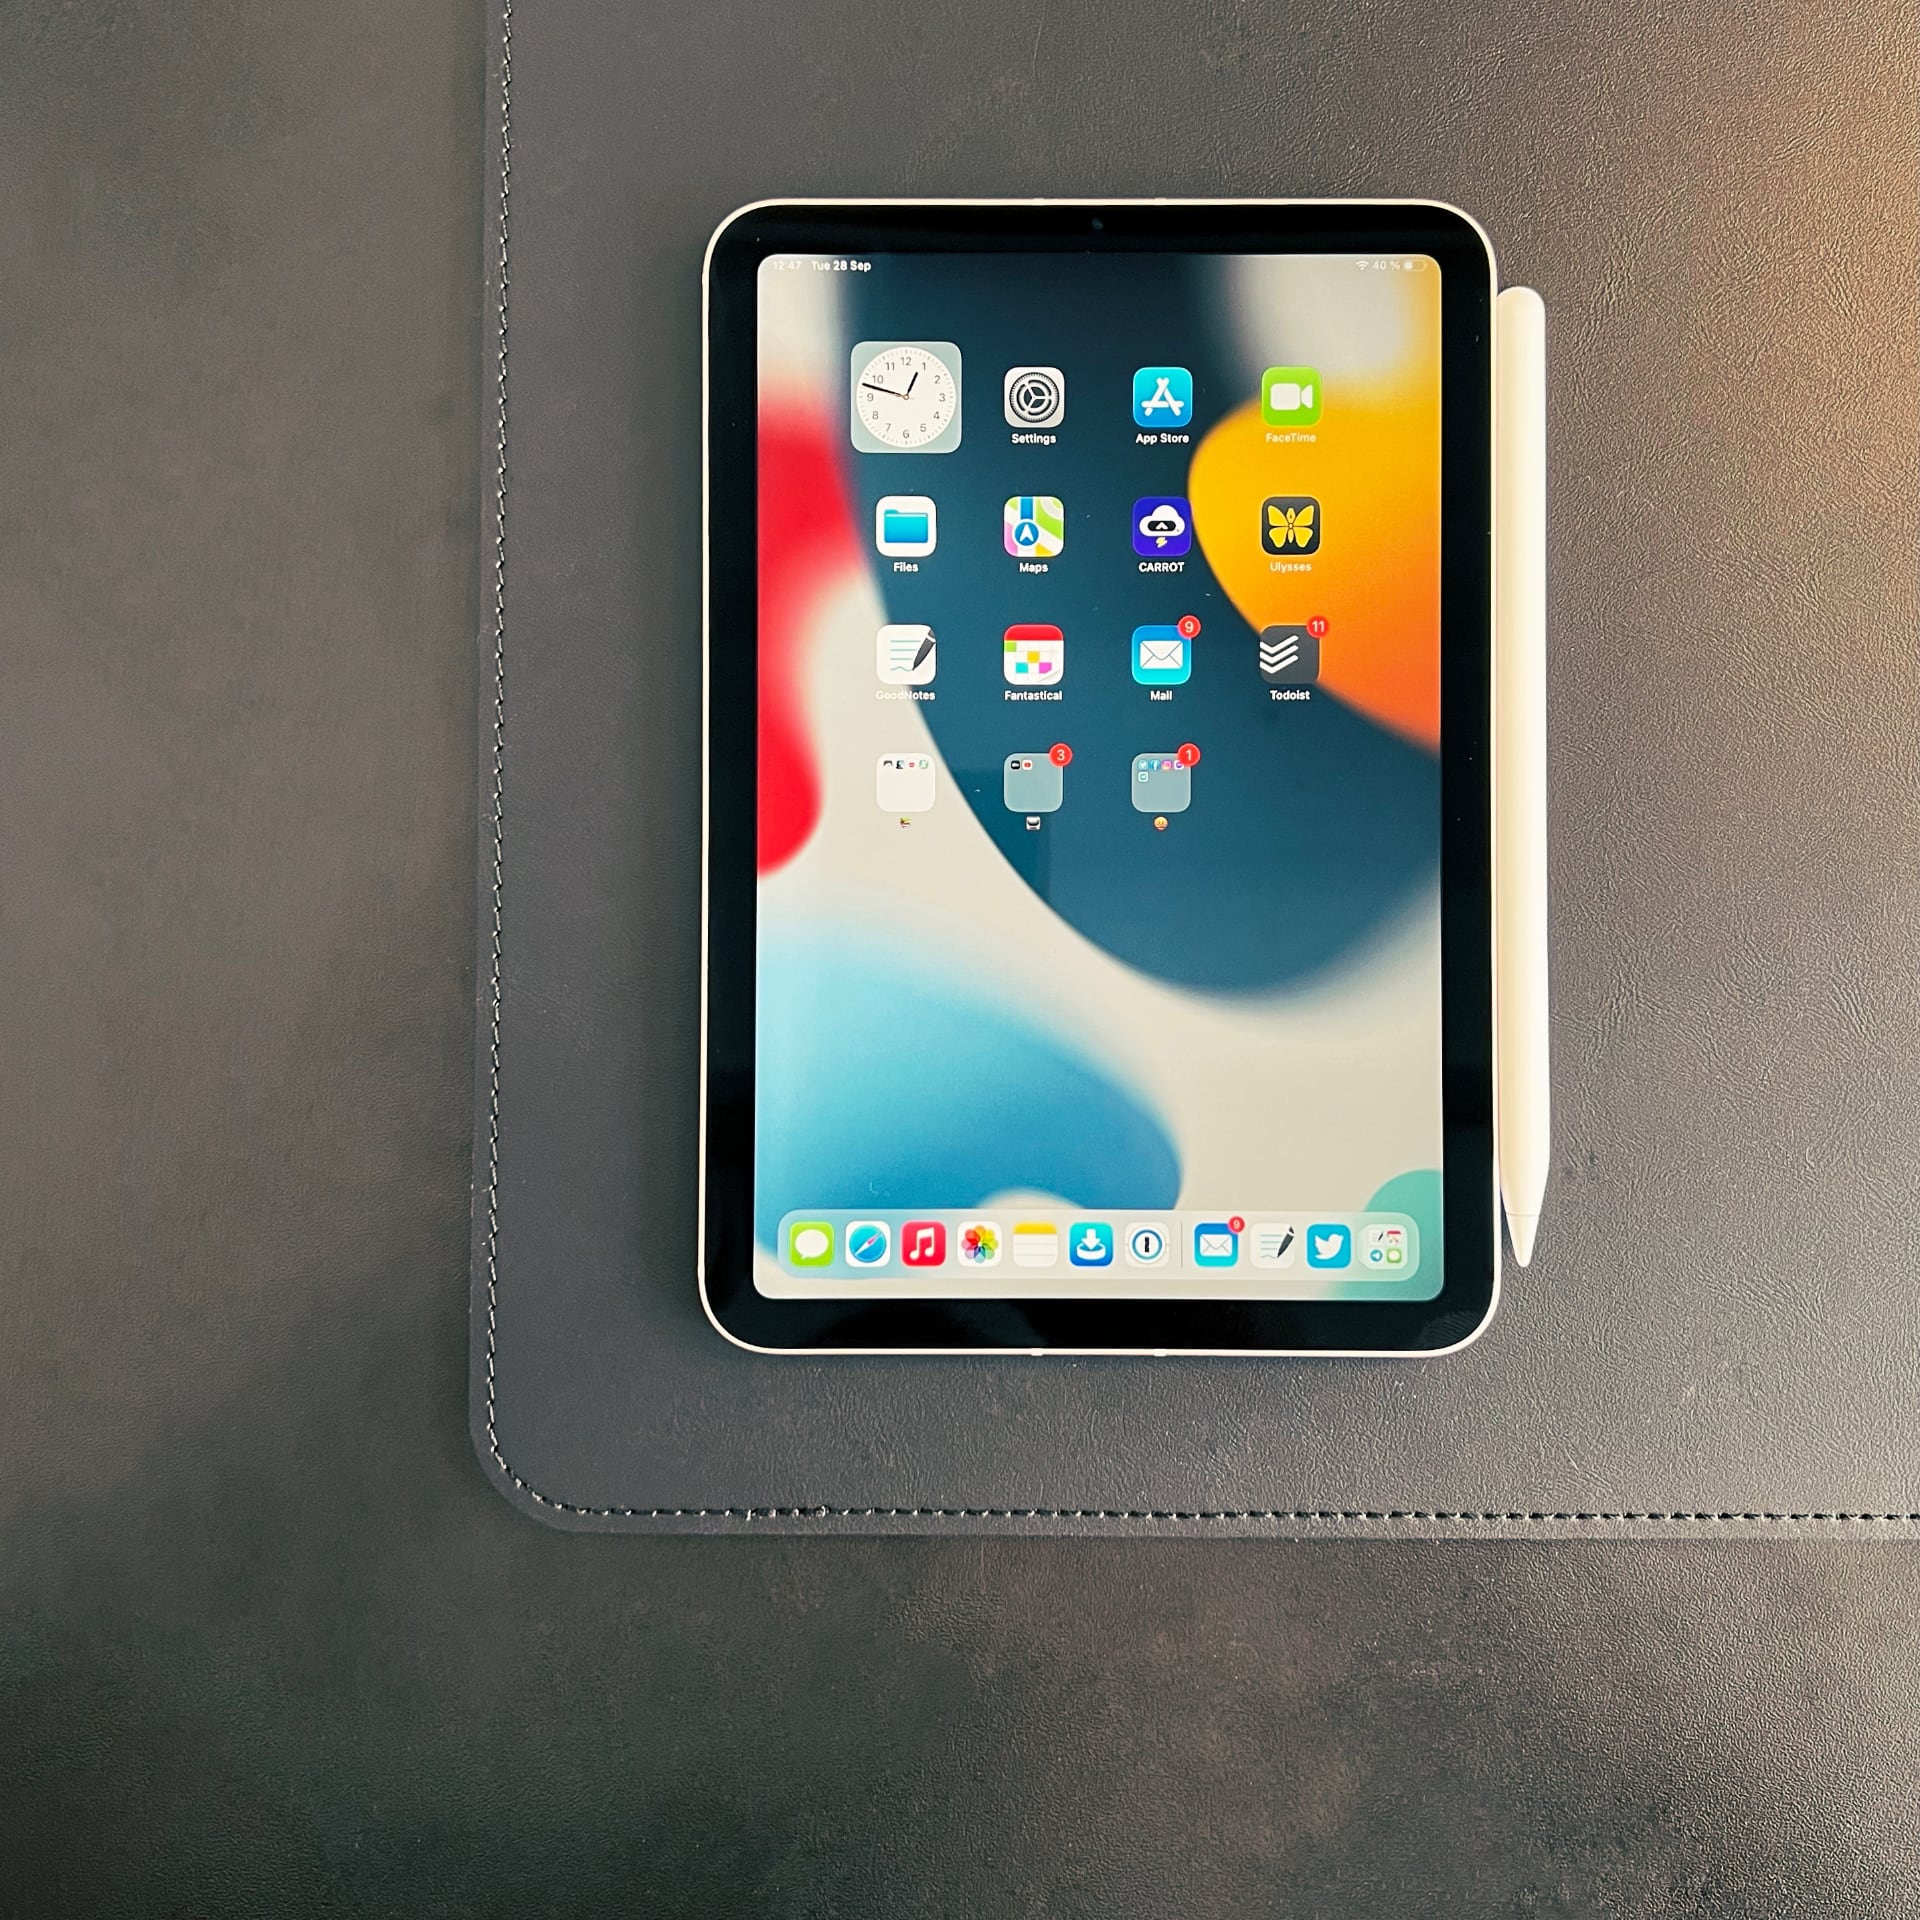 Should you buy an iPad mini 4 in 2021?